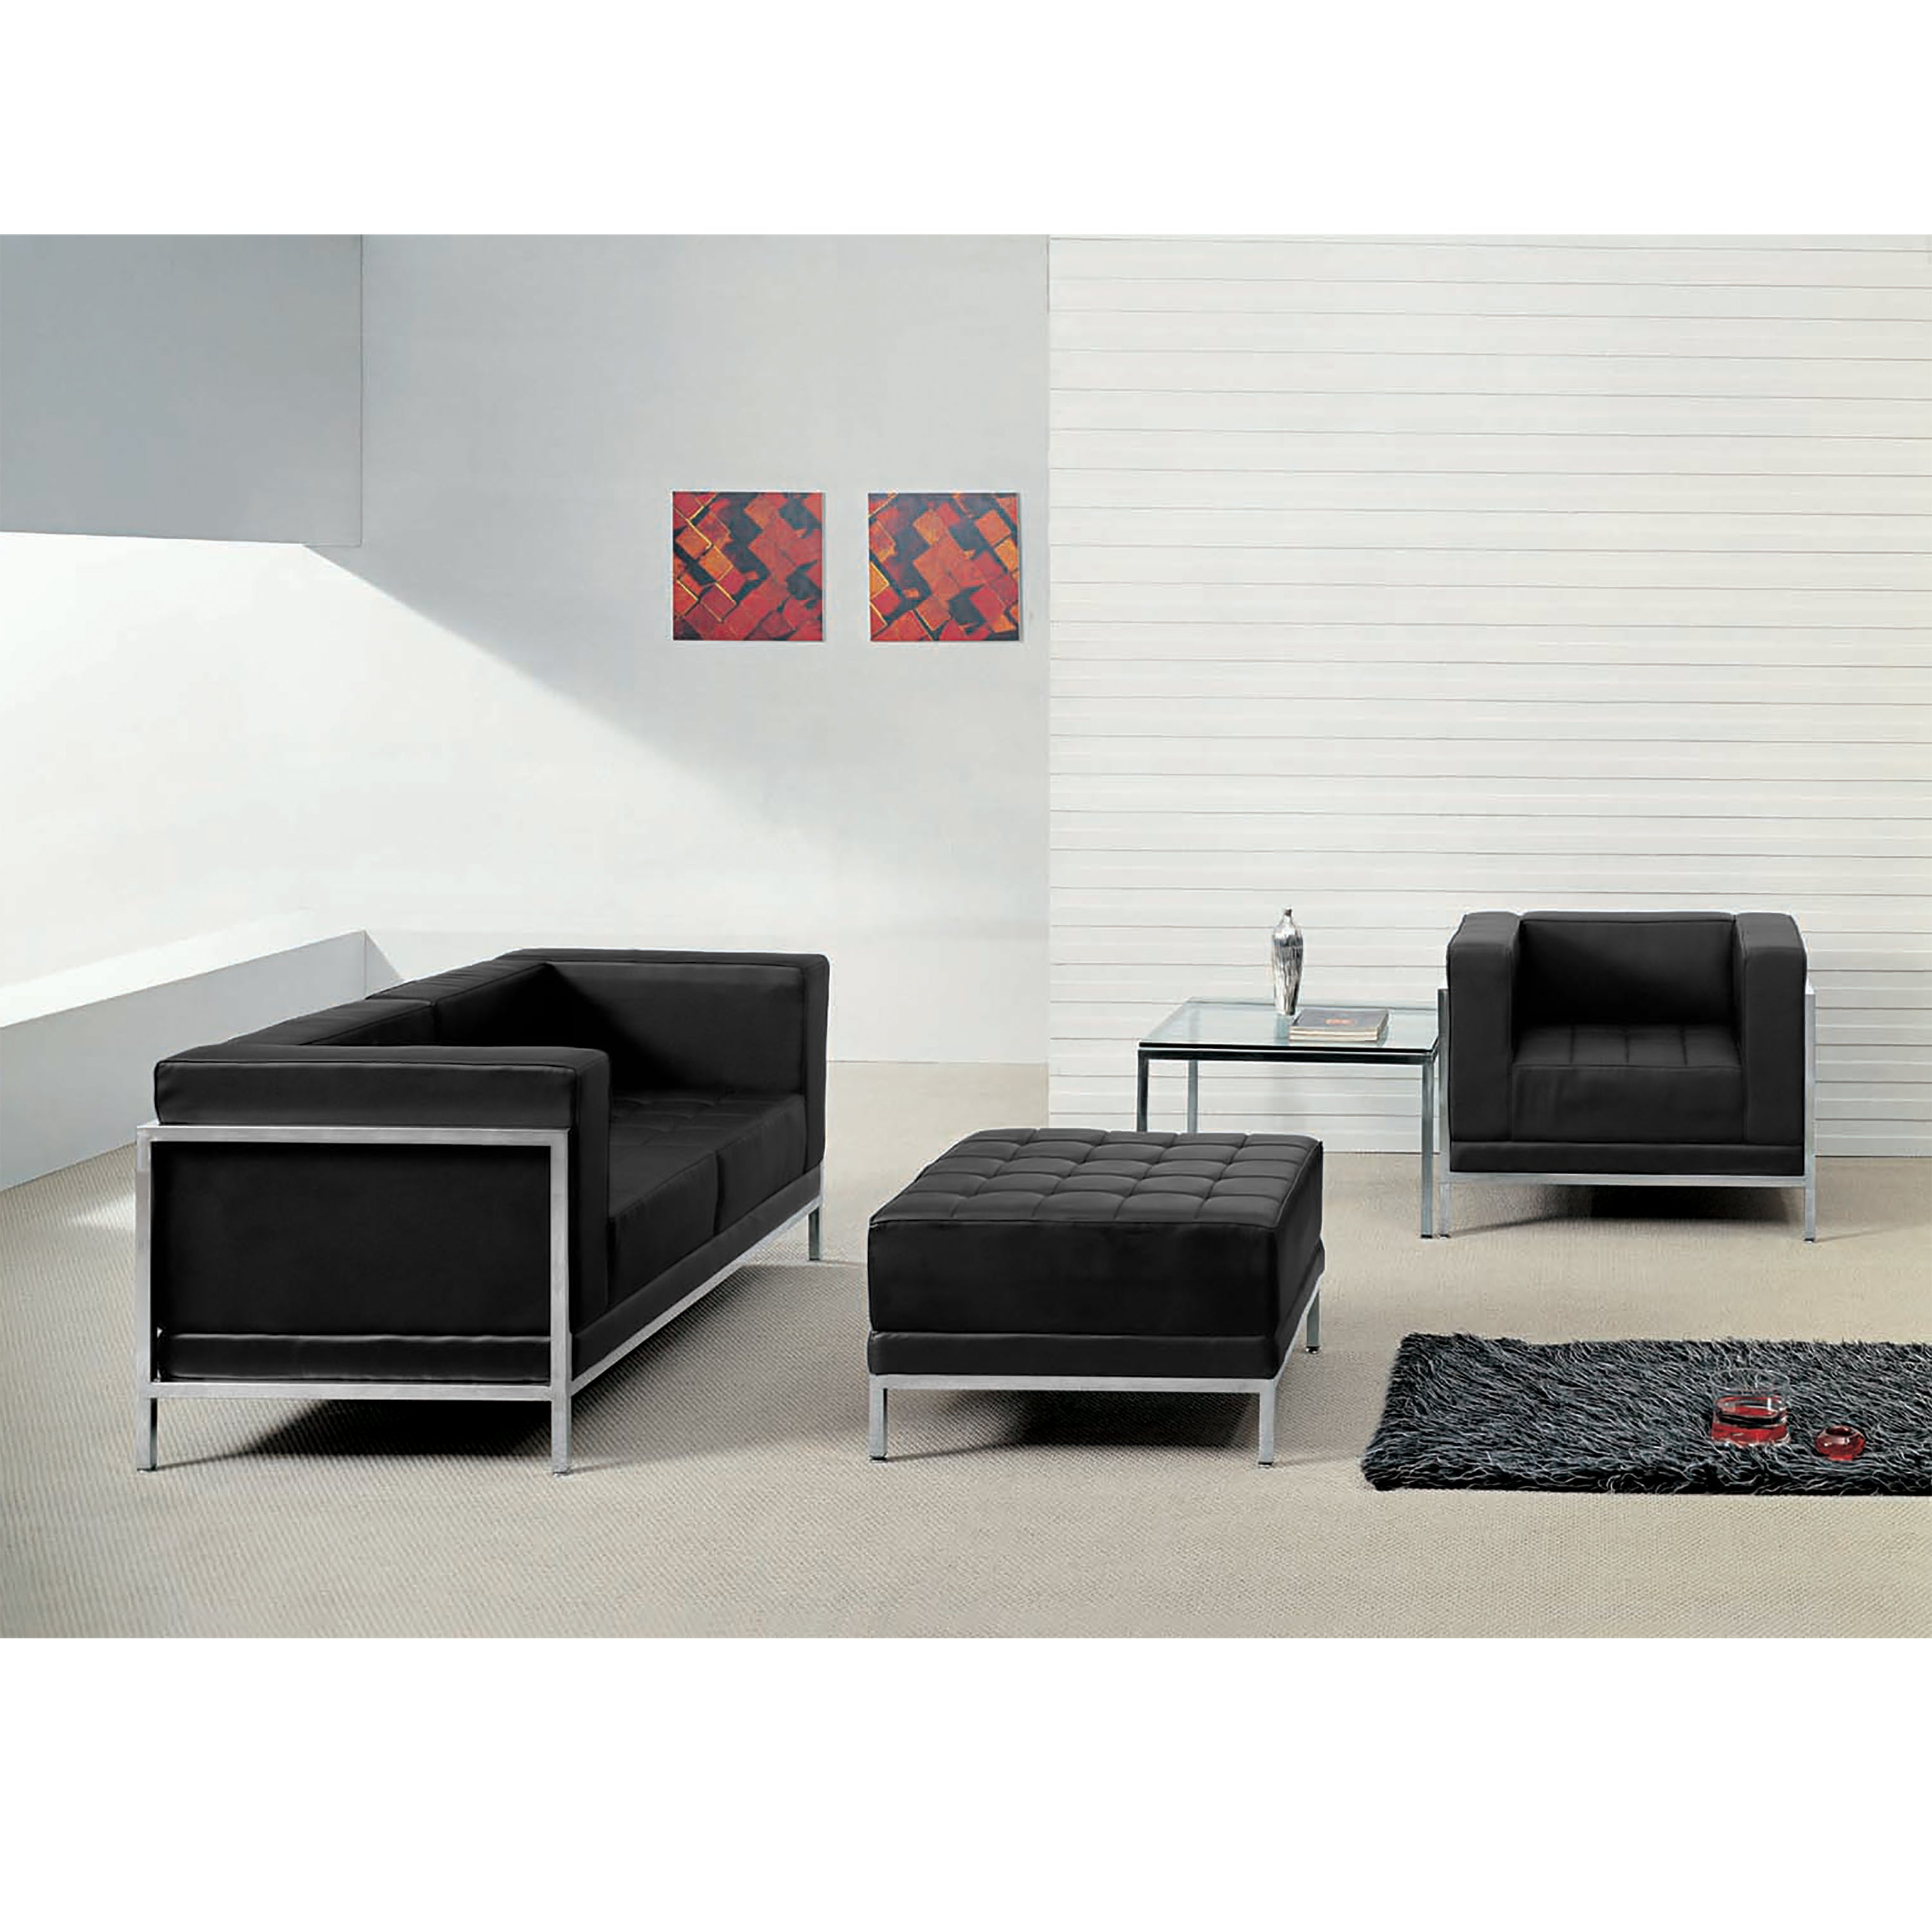 HERCULES Imagination Series LeatherSoft Loveseat, Chair & Ottoman Set-Modular Reception Set-Flash Furniture-Wall2Wall Furnishings